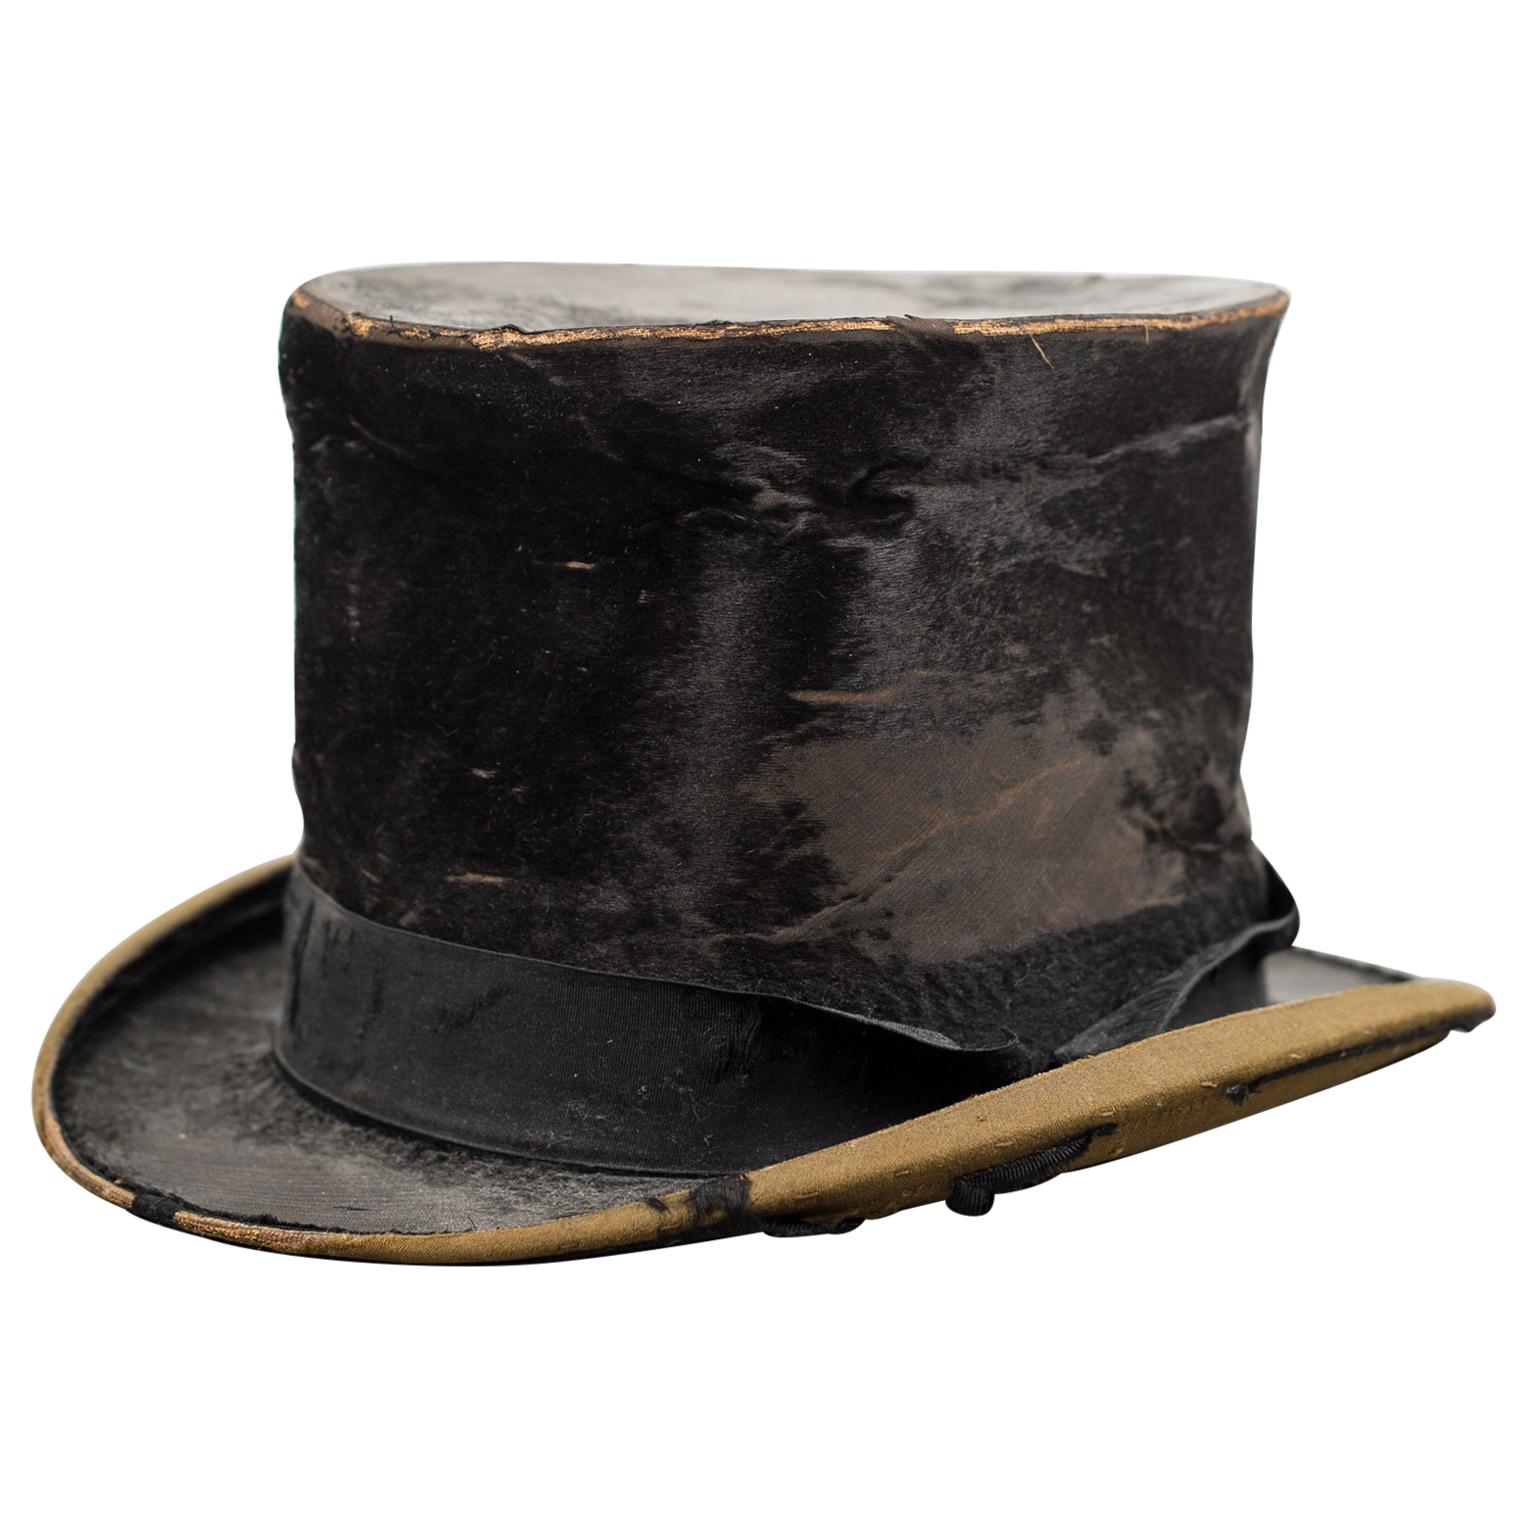 Antique Silk Top Hat, circa 1850-1900